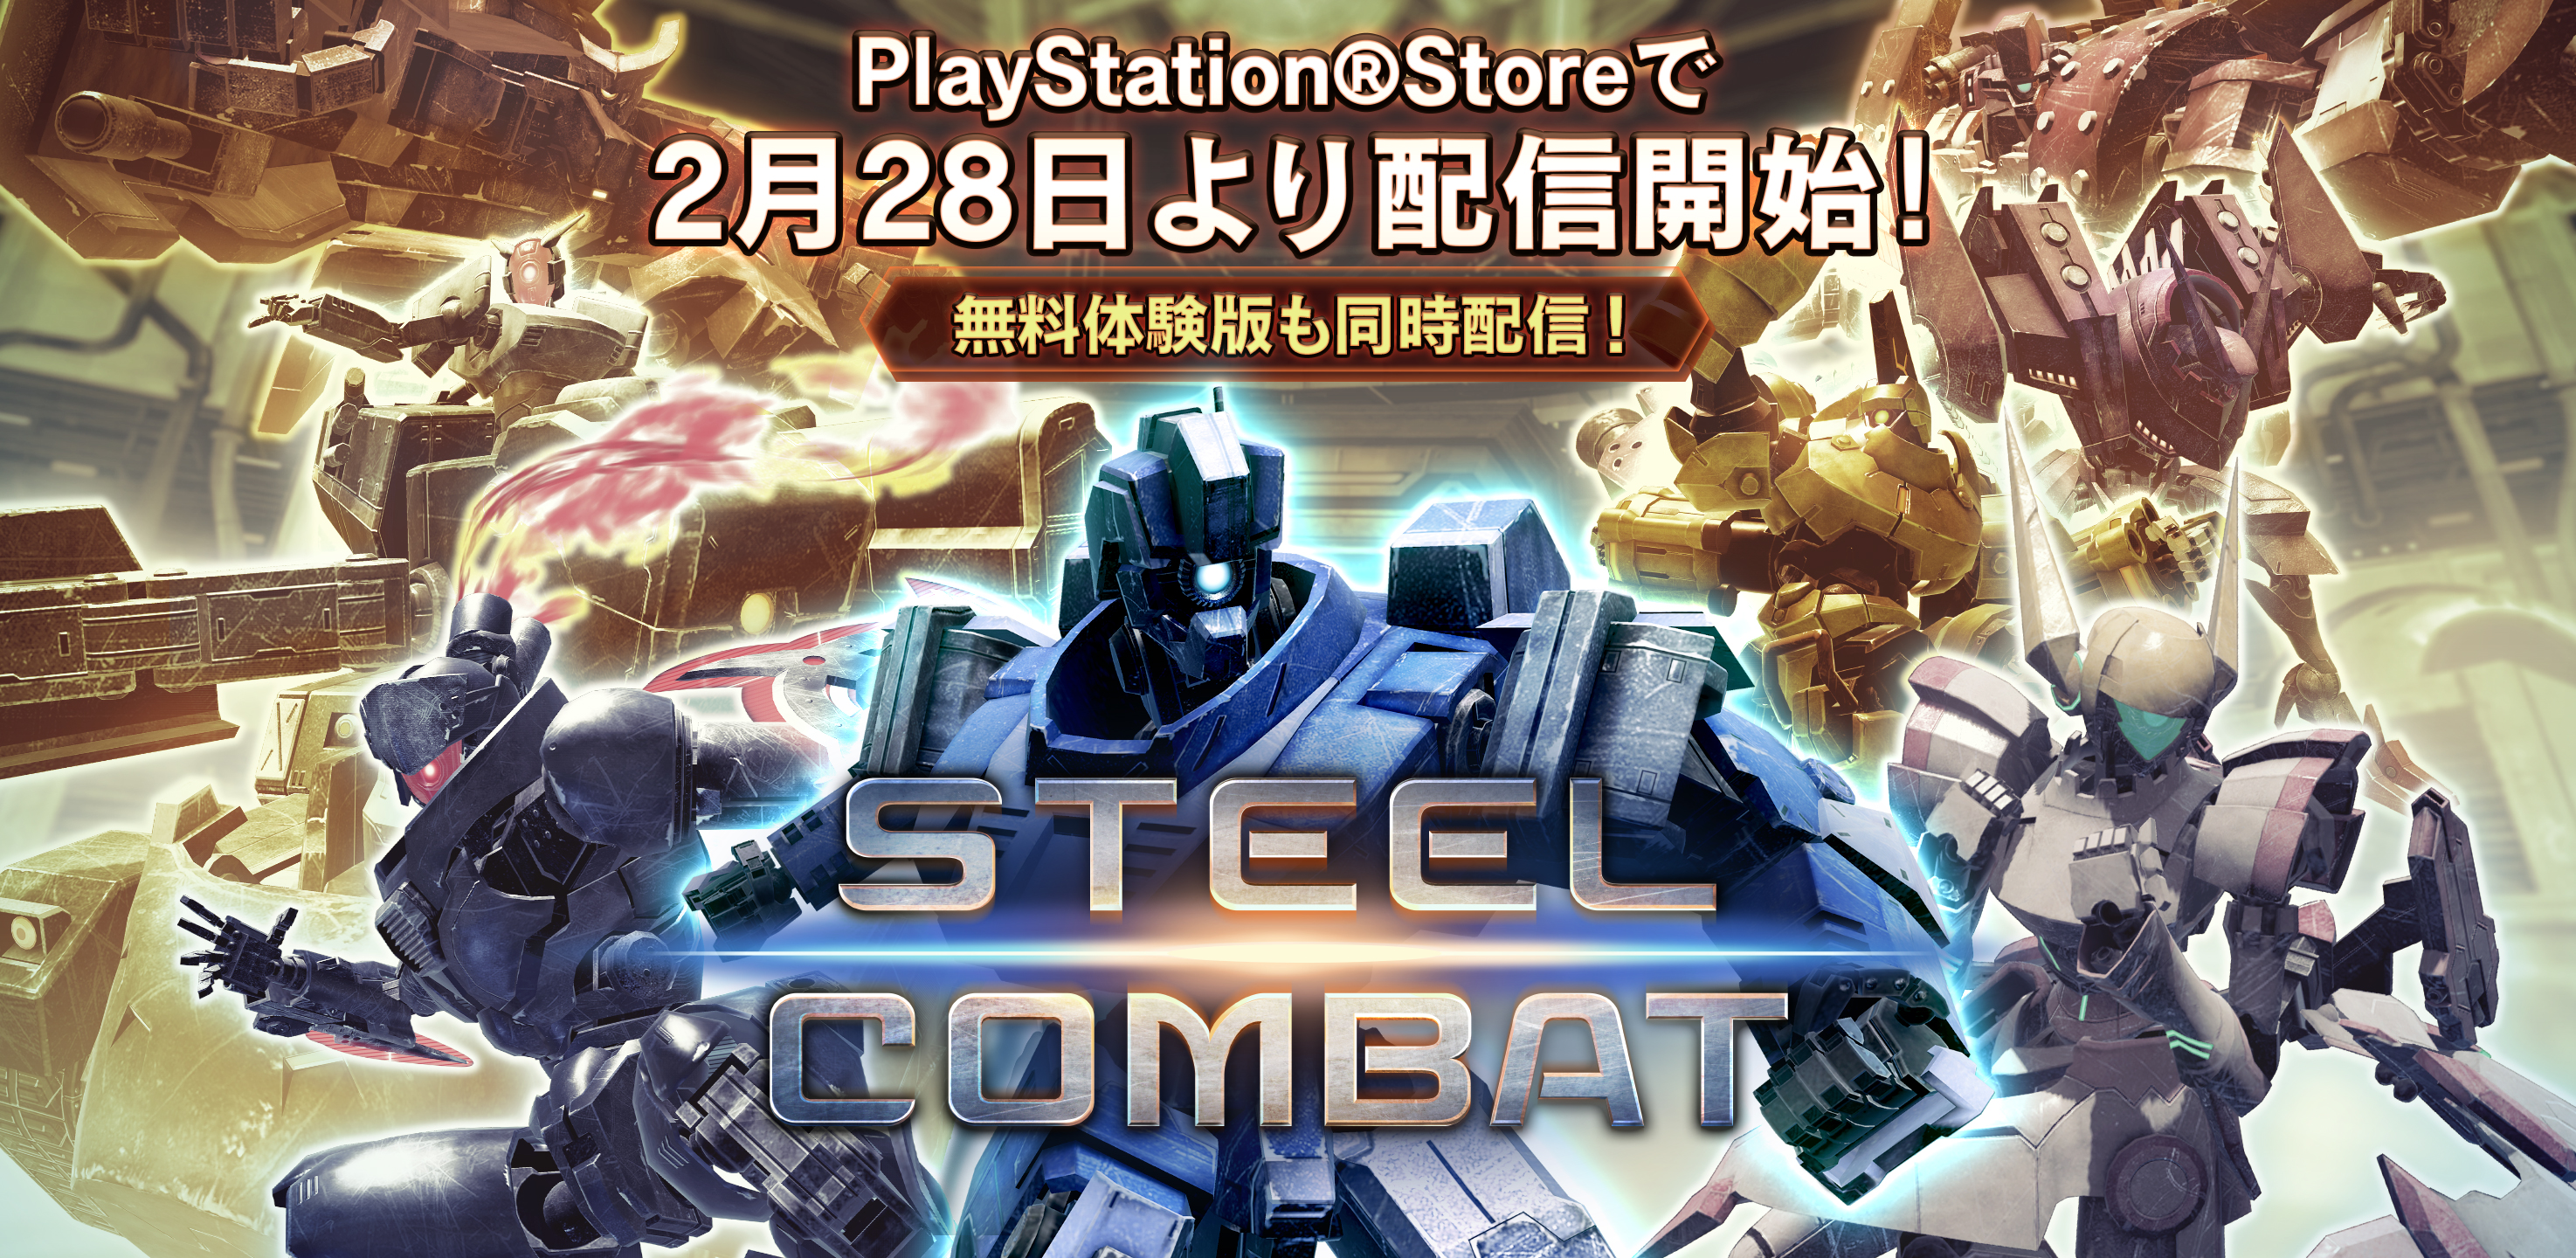 Playstation Vr用ロボット格闘ゲーム Steel Combat を発売 コロプラのプレスリリース